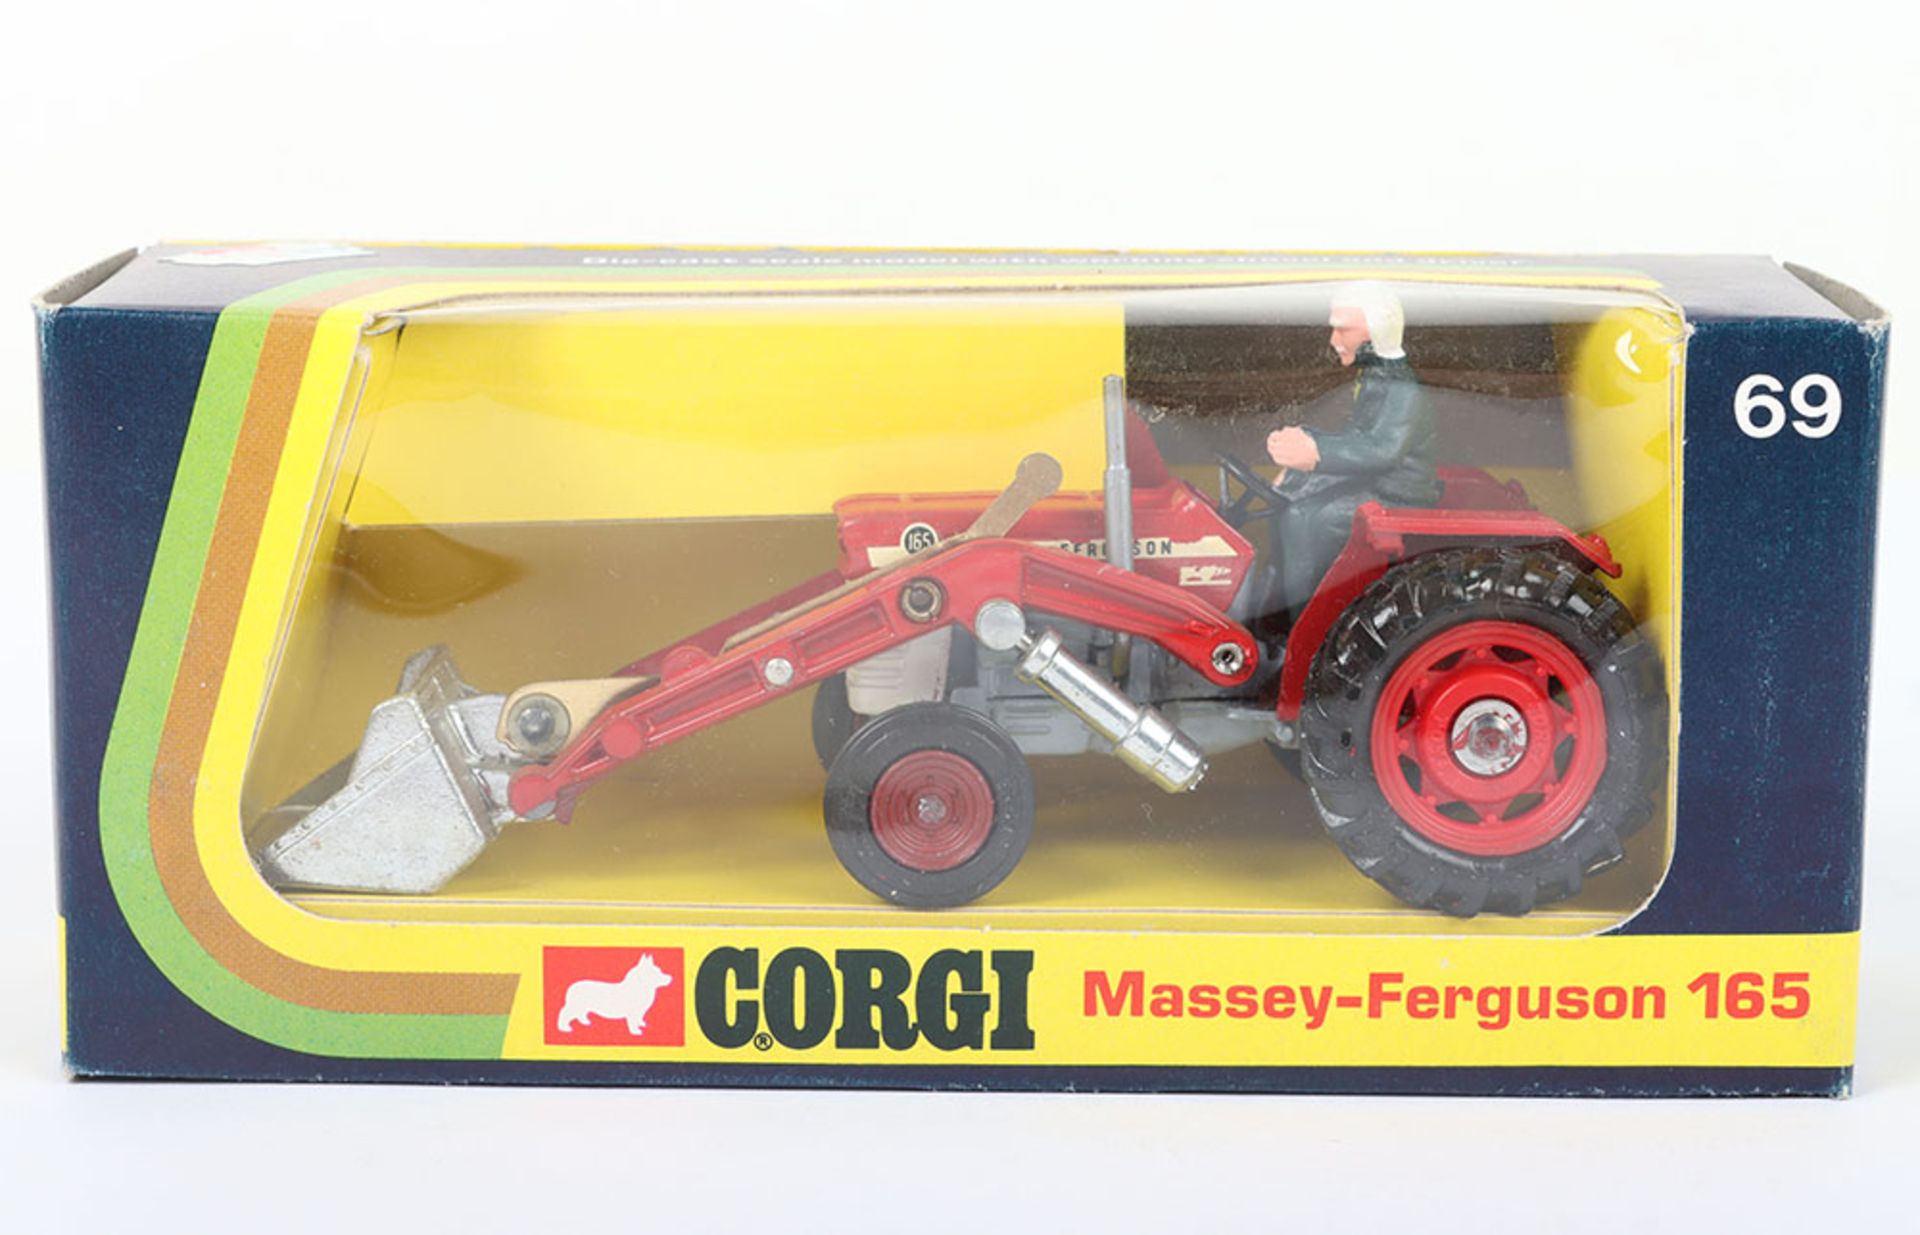 Rare Last issue Corgi 69 Massey-Ferguson 165 Tractor with Shovel